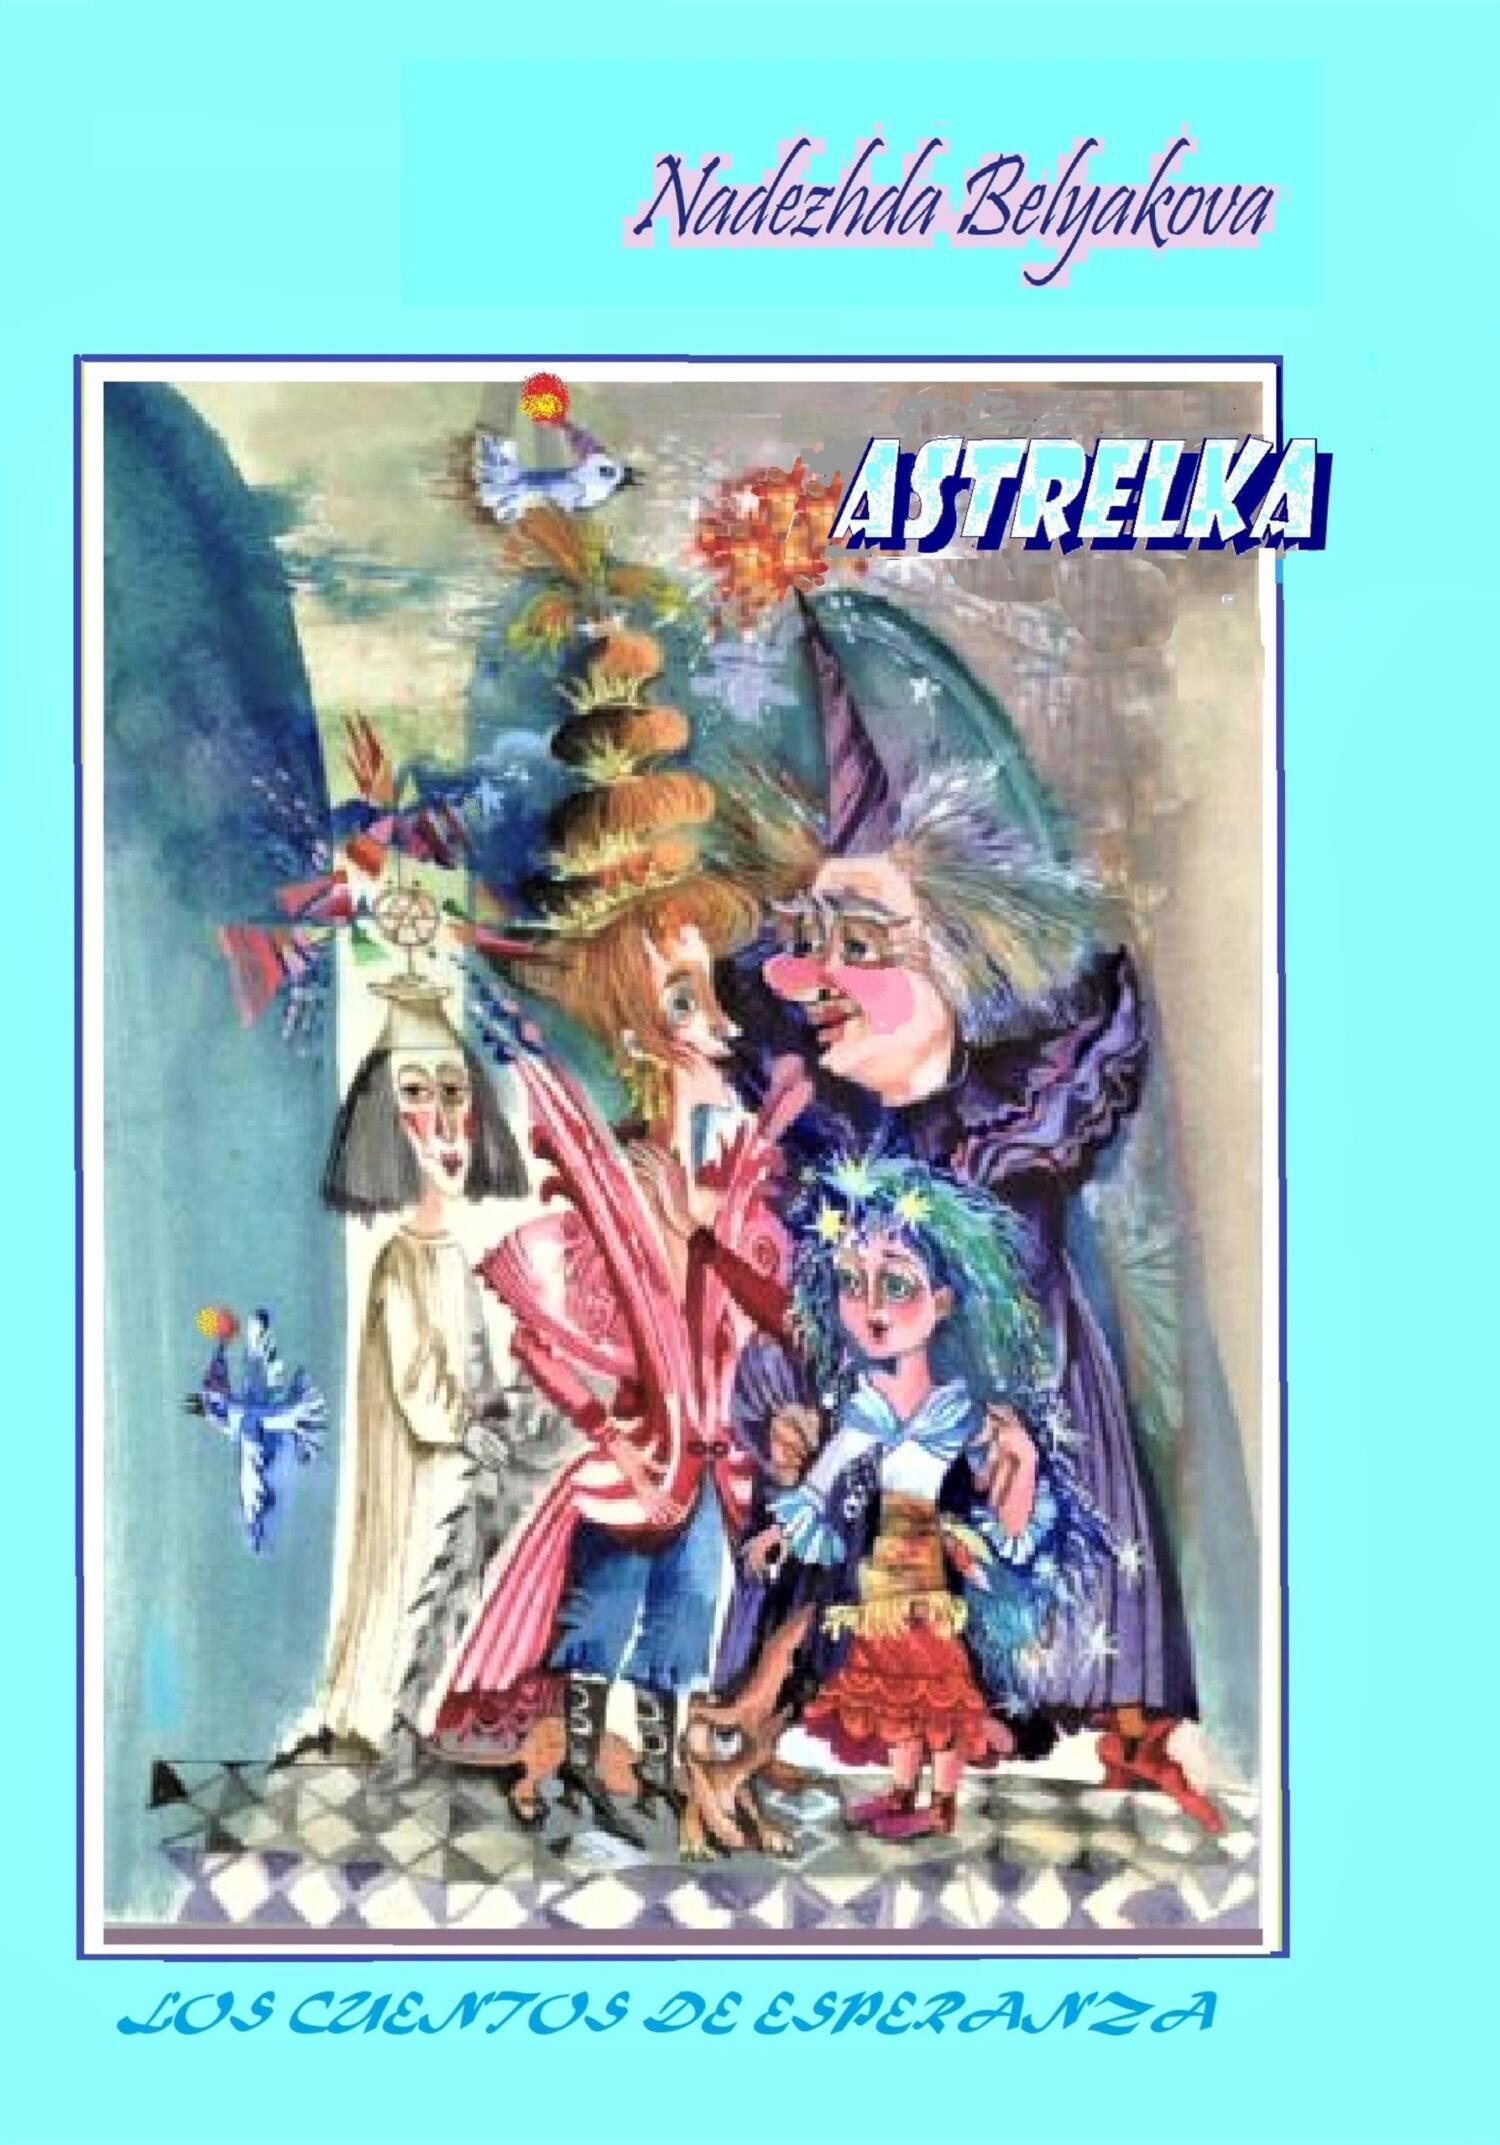 Astrelka